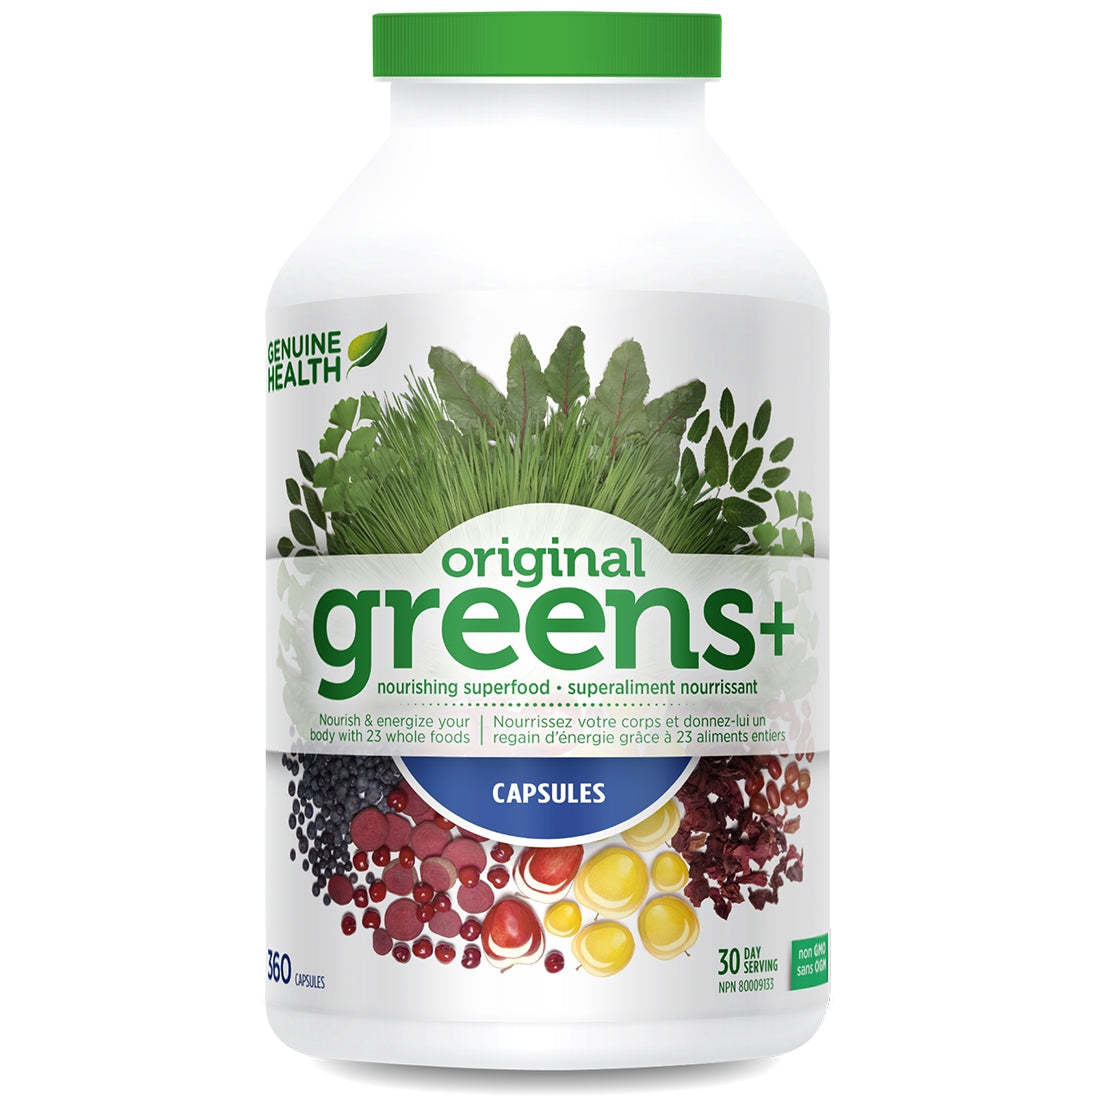 Genuine Health Greens+ Capsules